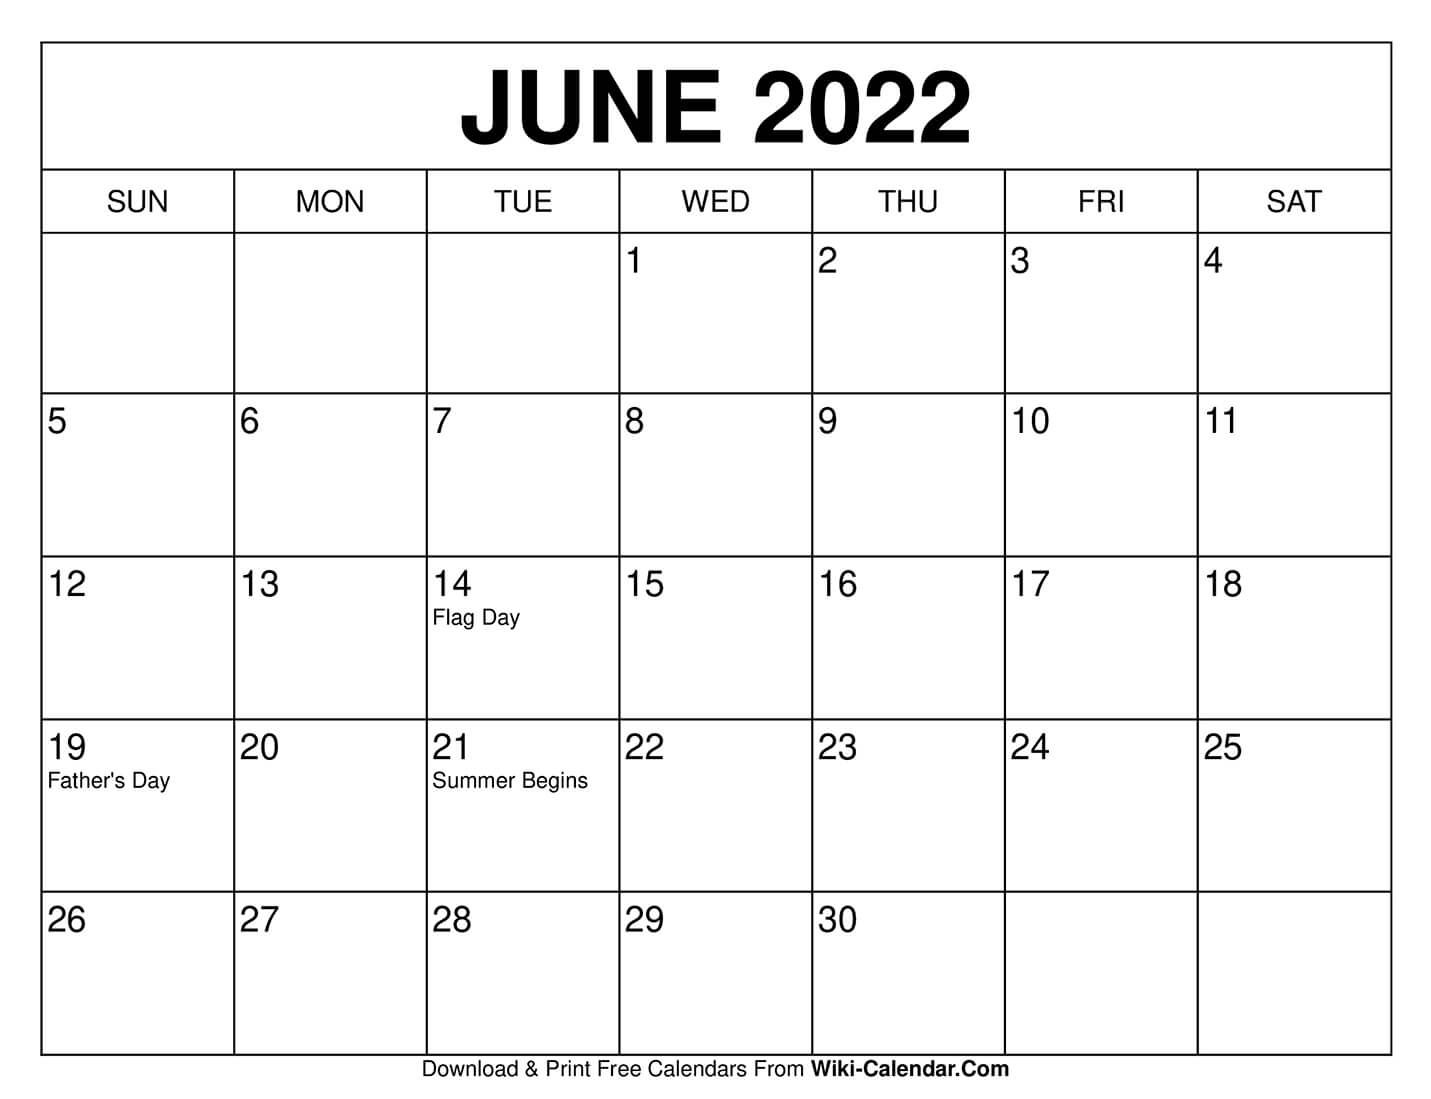 Free download June 2022 Calendar Calendar printables calendars to